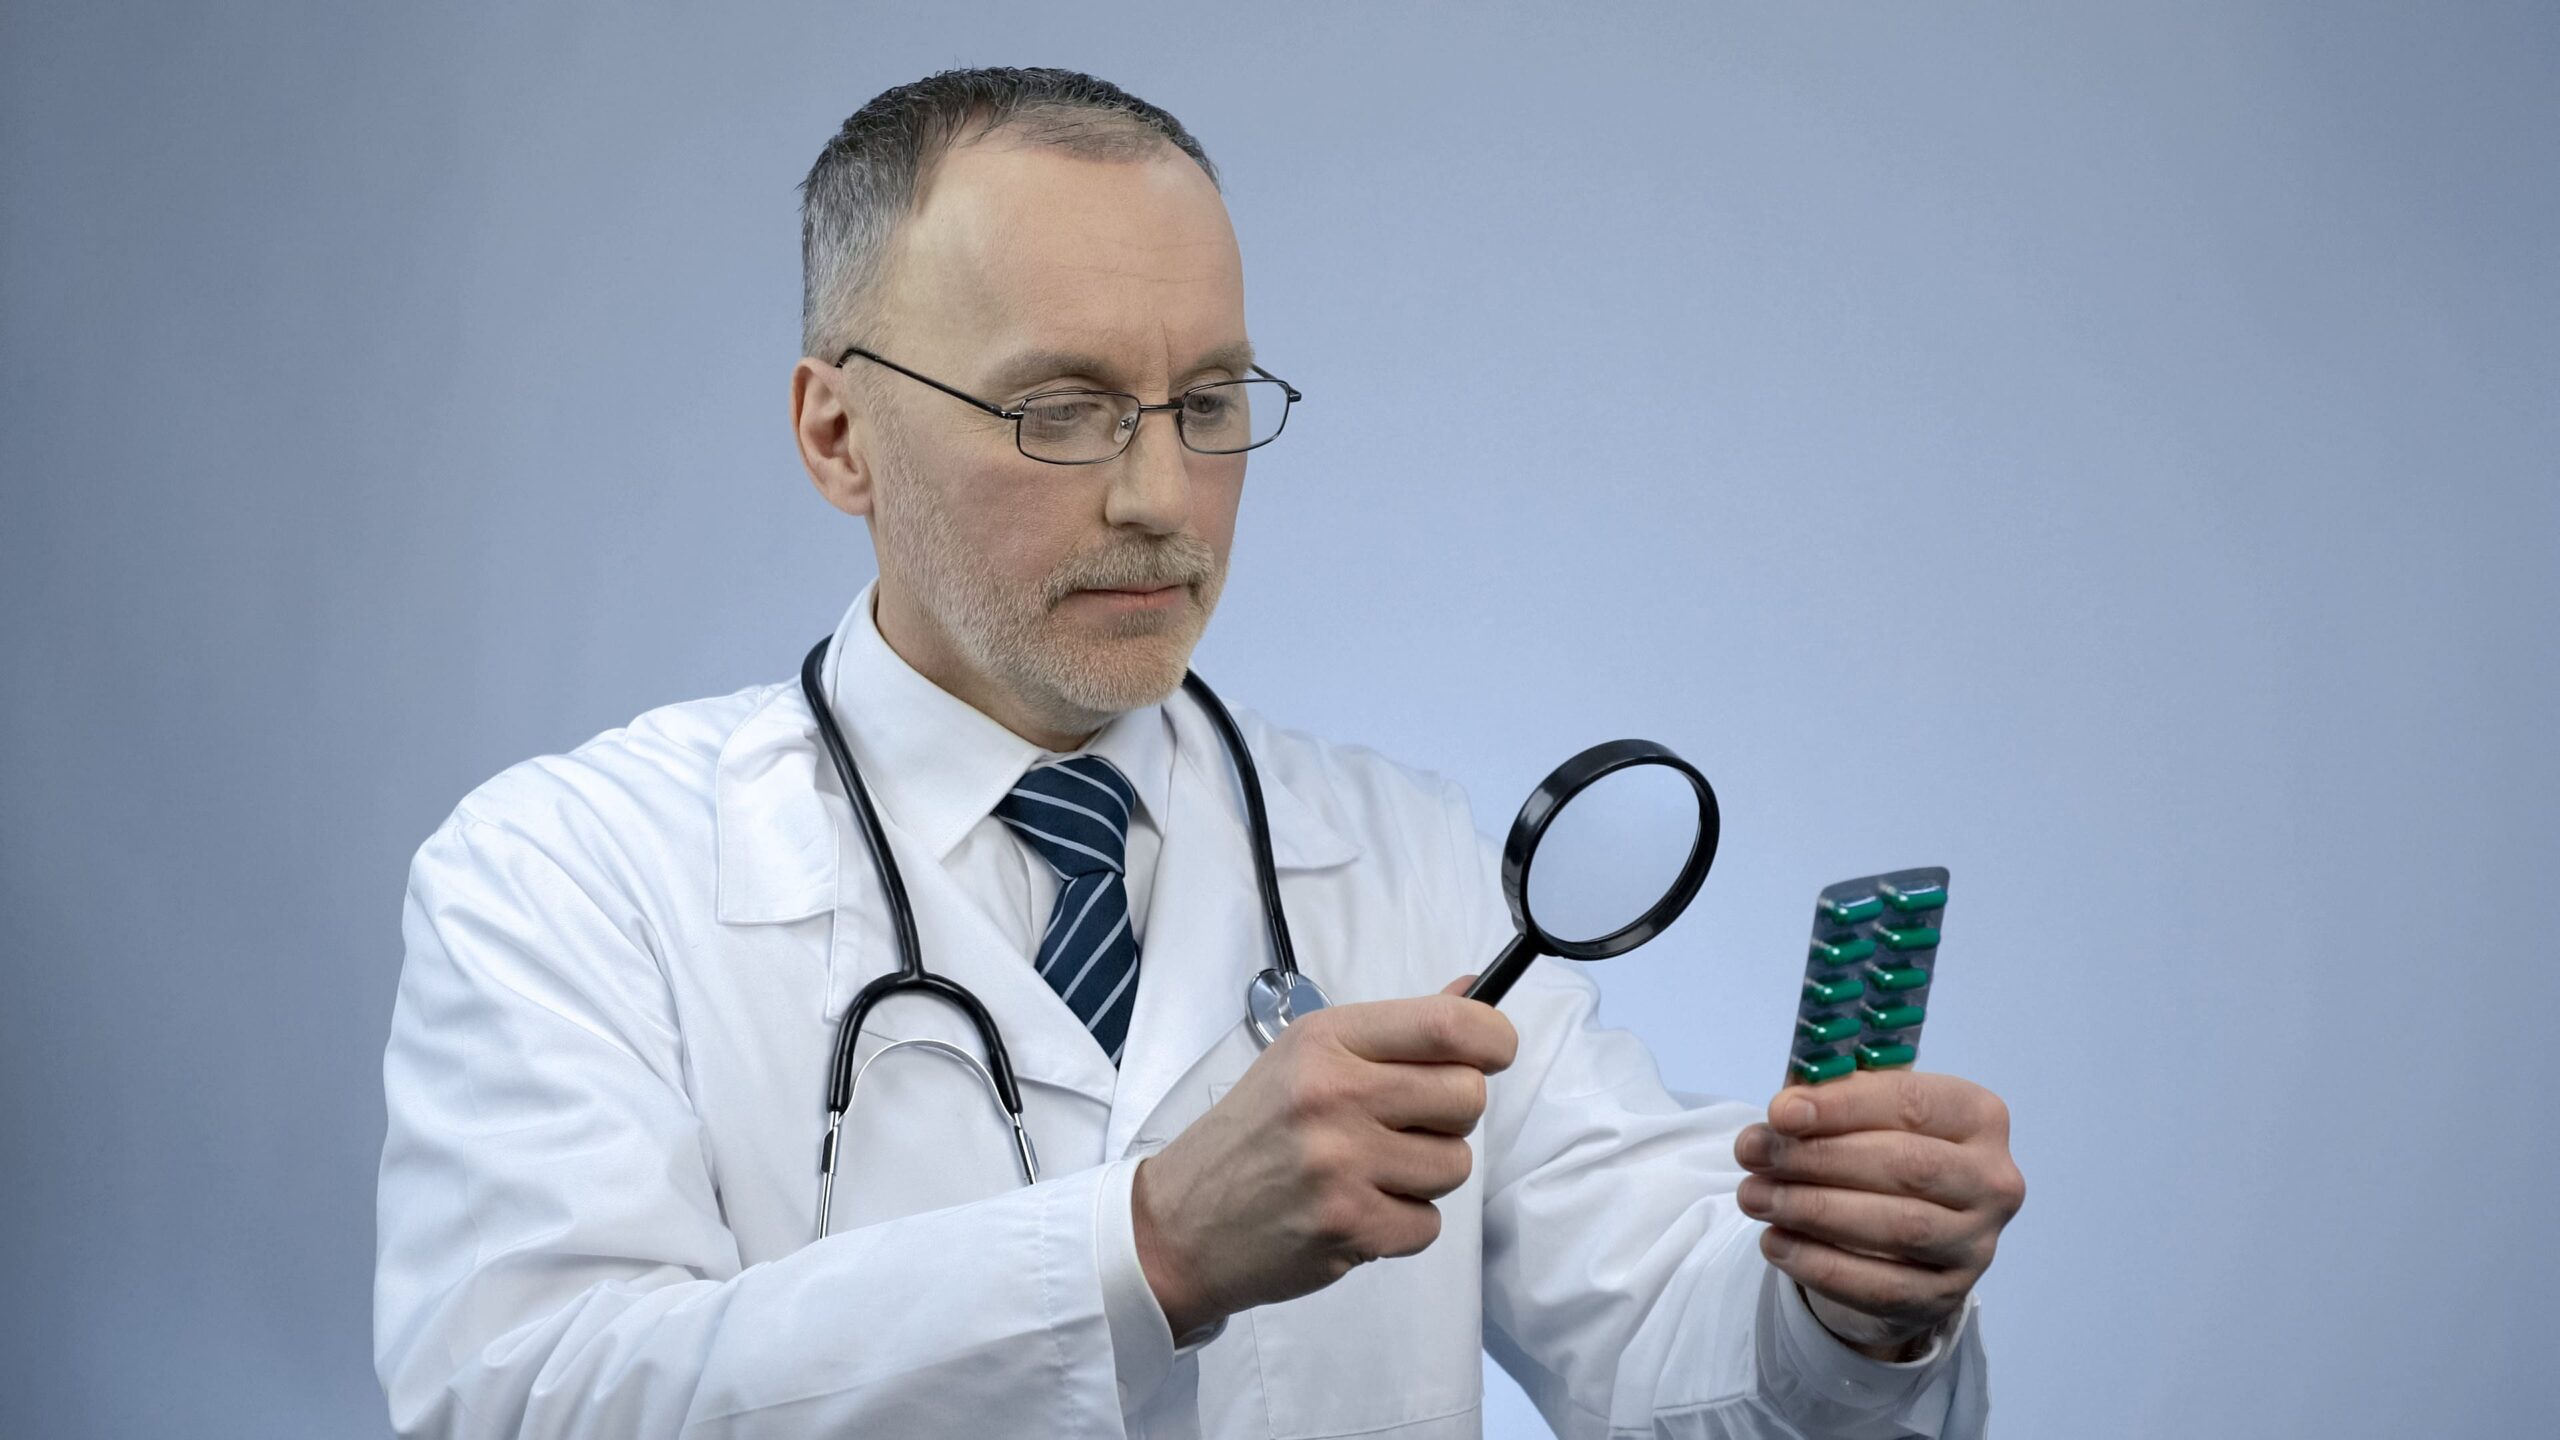 A Scientist detecting medicine